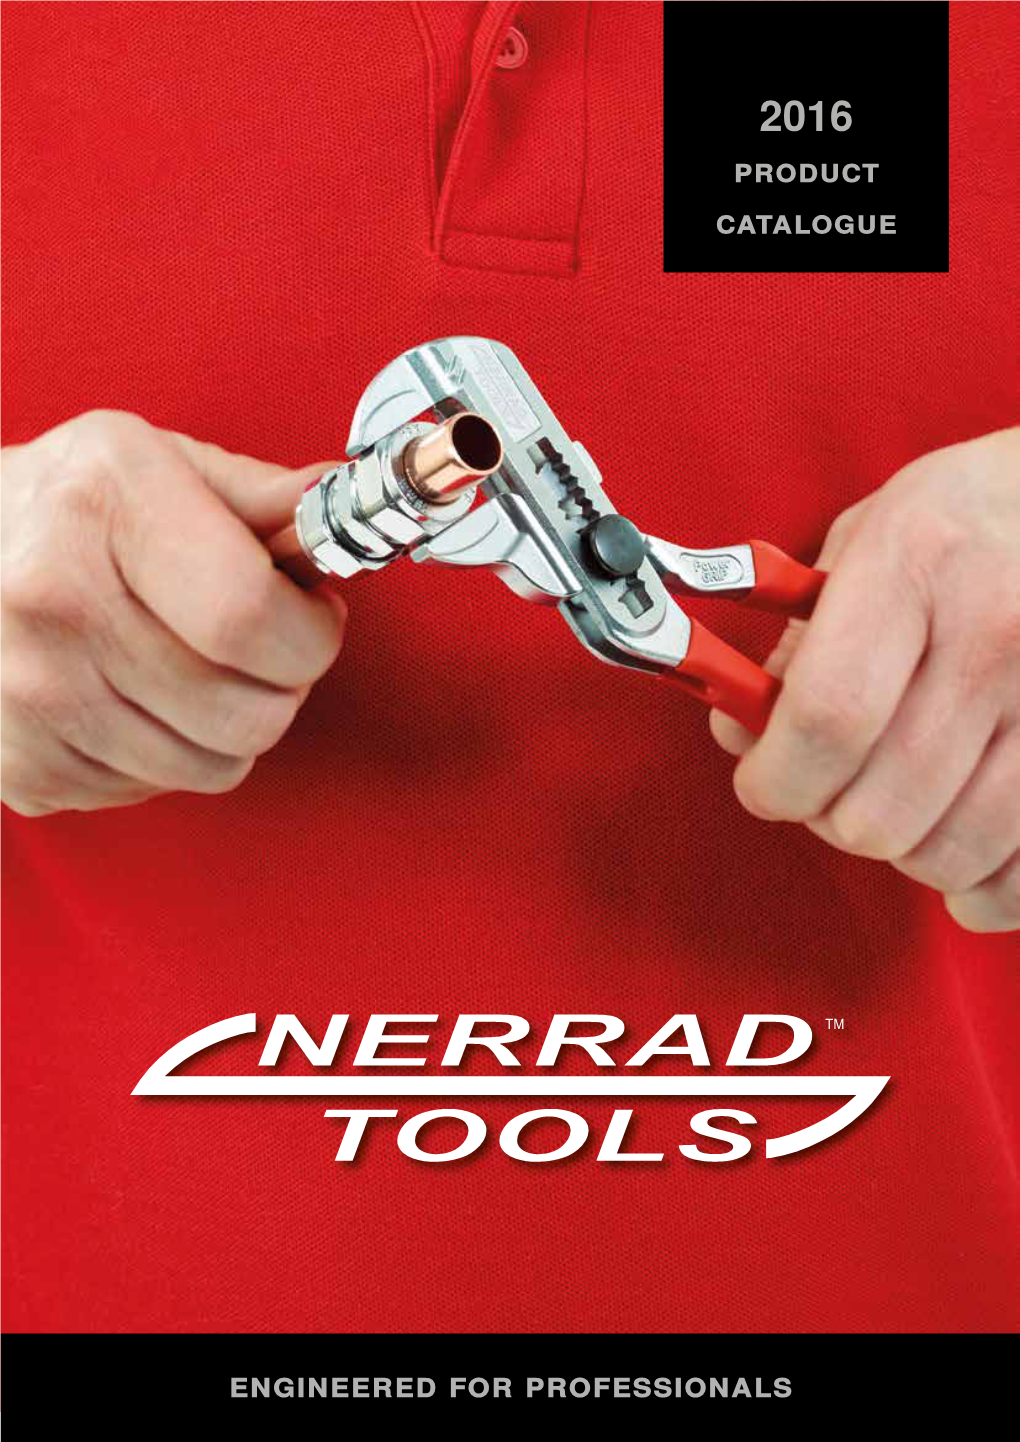 Nerrad Tools 20 Years Ago